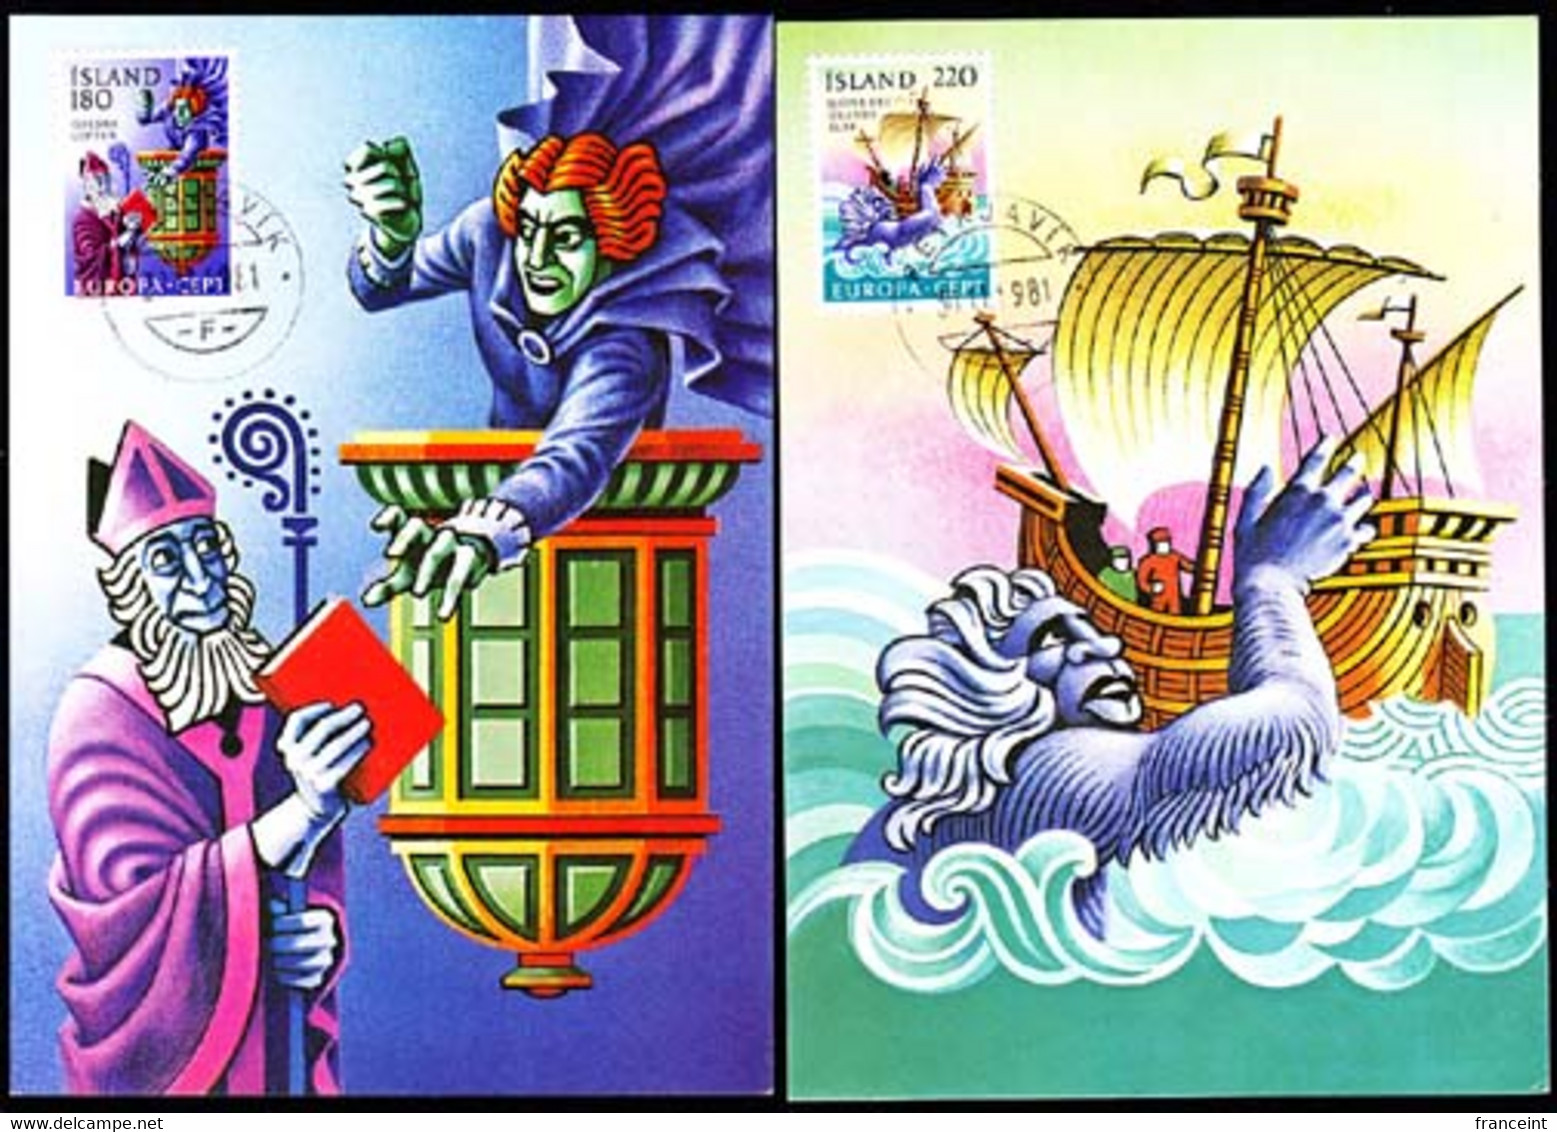 ICELAND (1981) Luftur The Sorcerer. Sea Witch. Set Of 2 Maximum Cards. Scott Nos 541-2, Yvert Nos 518-9 - Maximum Cards